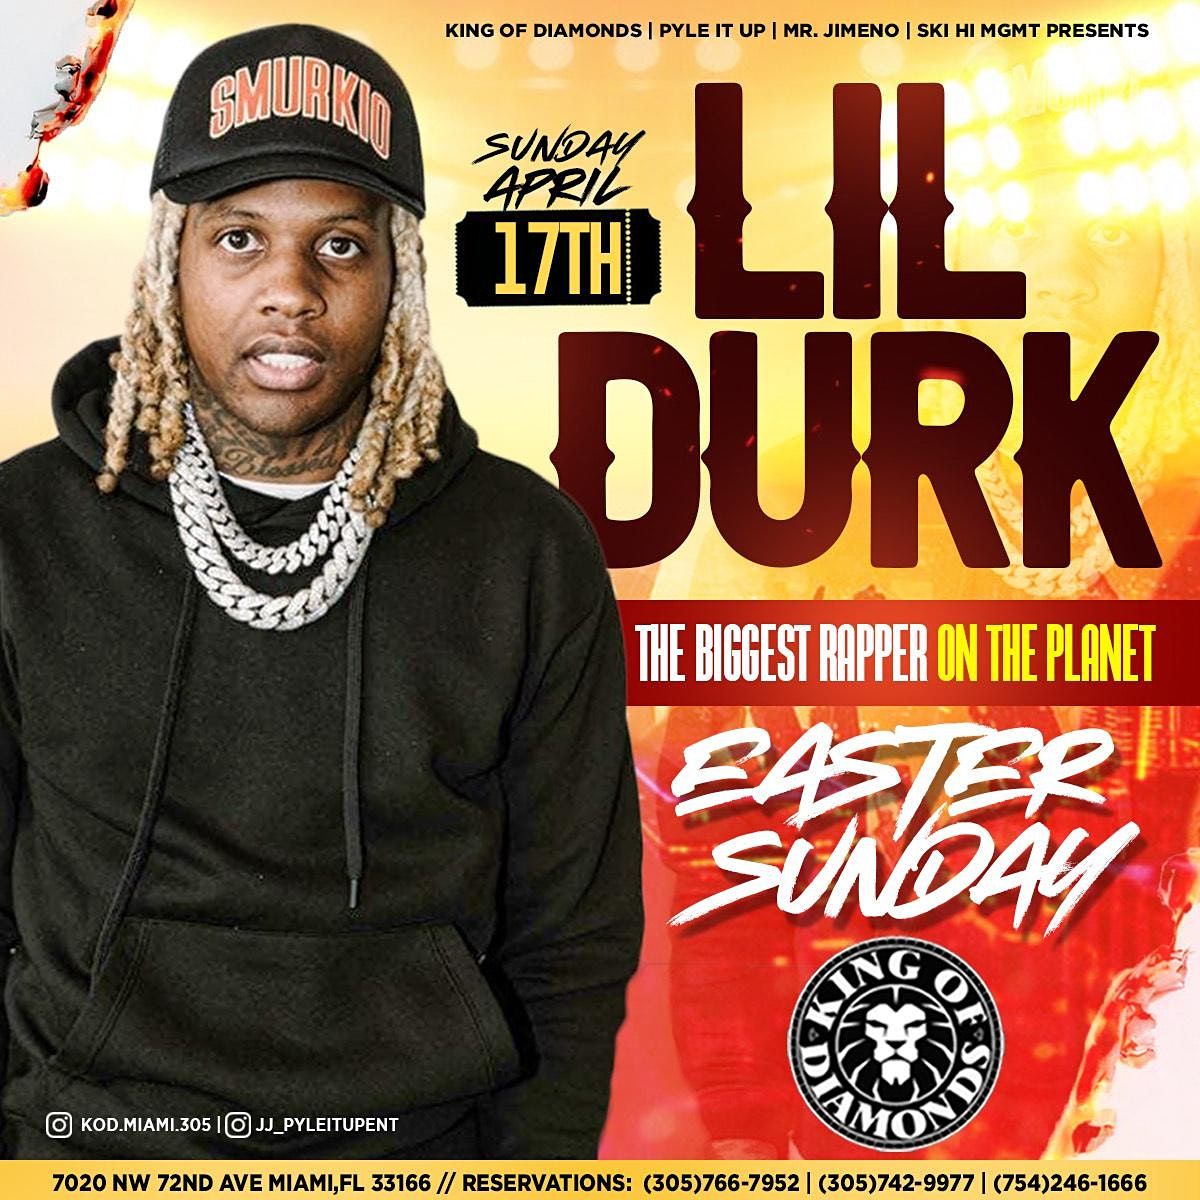 Lil Durk Live Easter Sunday Chicago Invades King Of Diamonds, KOD